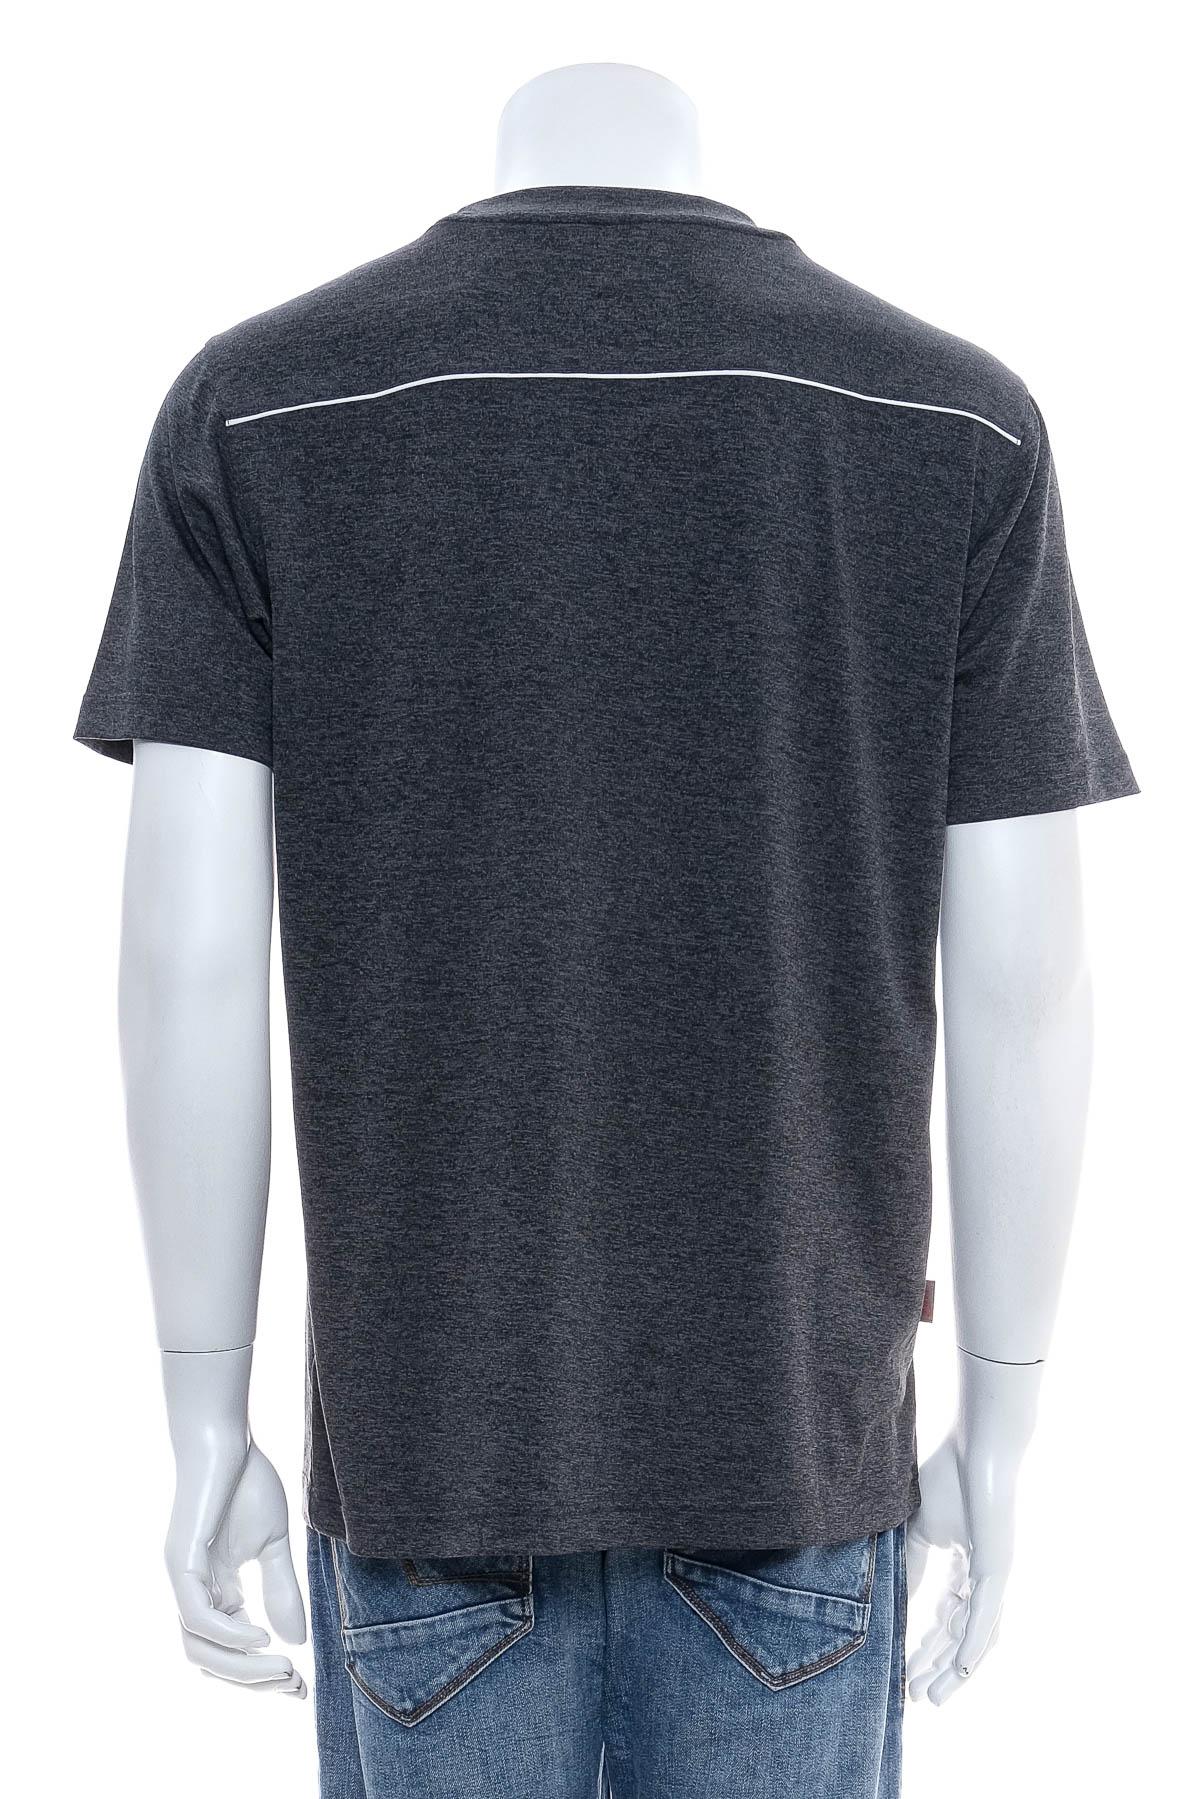 Men's T-shirt - Fima Collection - 1